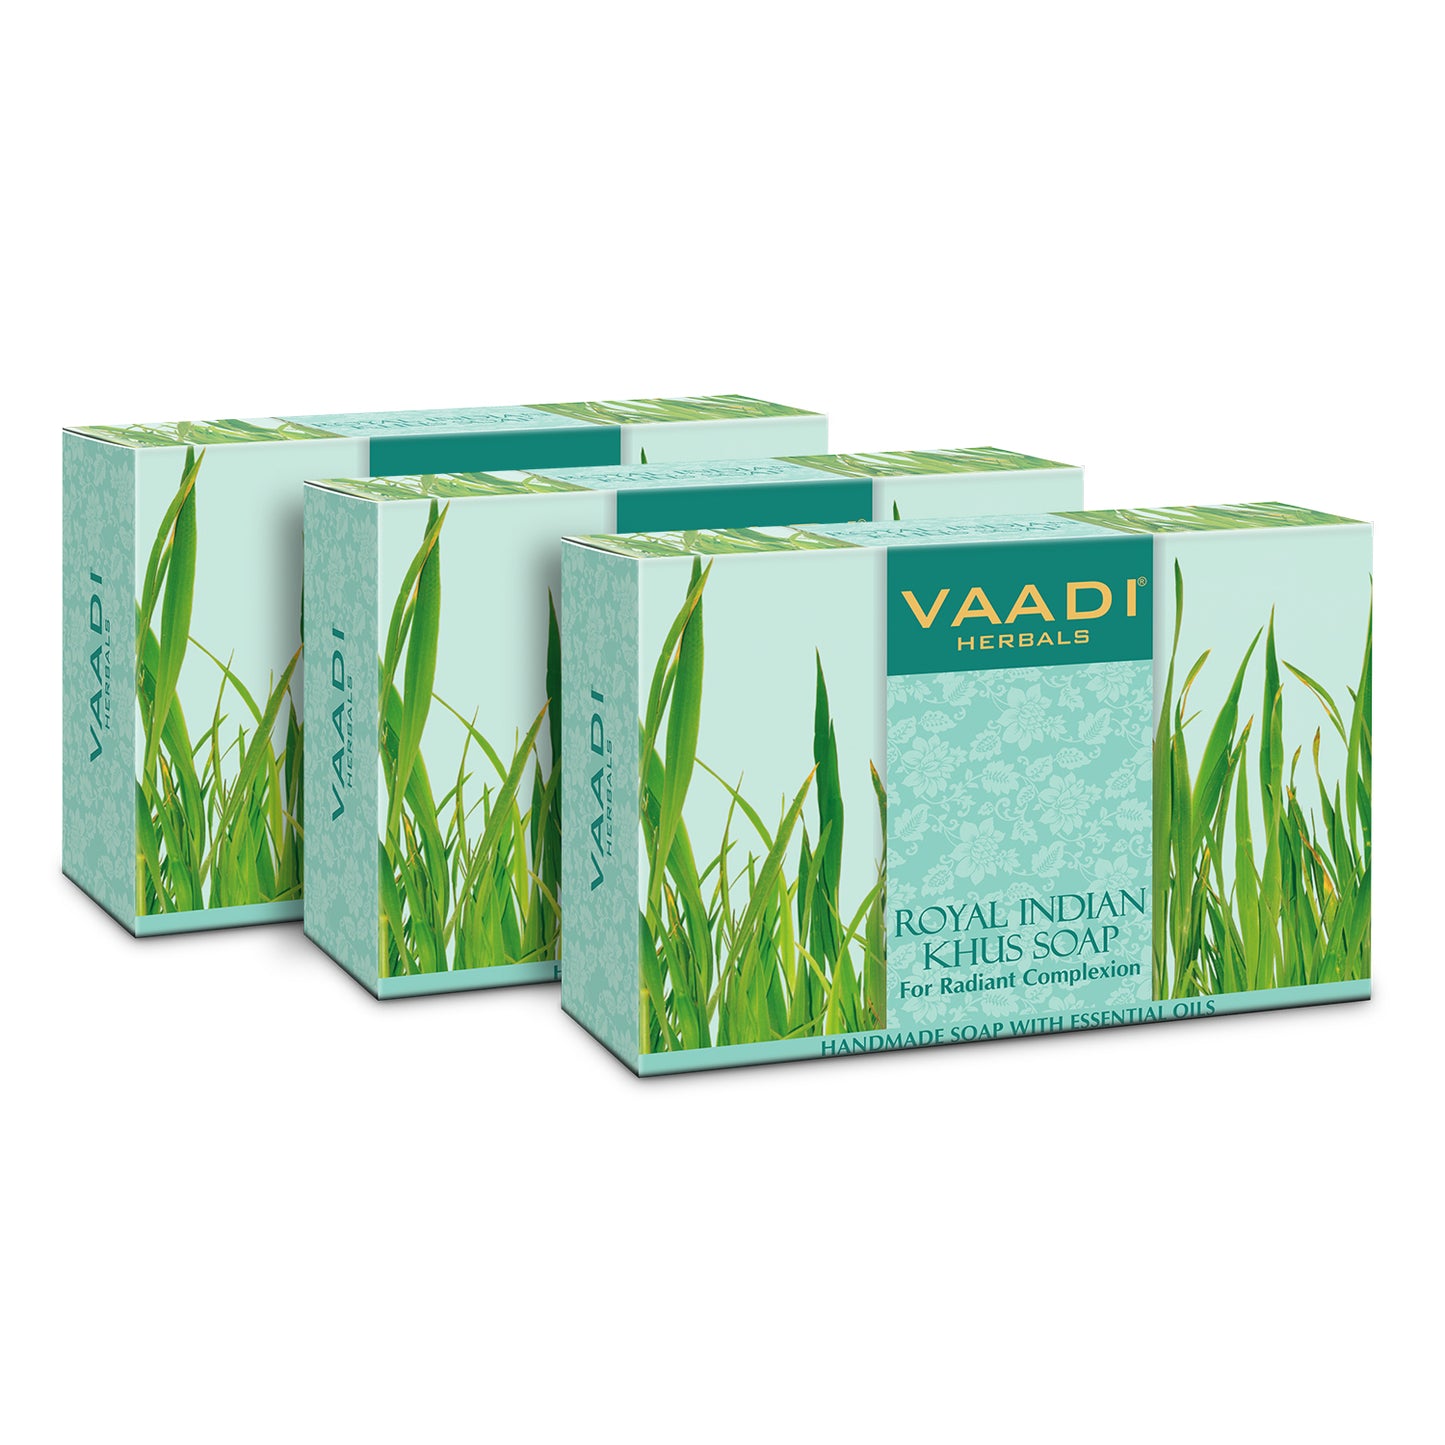 Royal India Organic Khus (Vetiver) Soap with Olive & Soyabean Oil - Rejuvenates Skin - Boosts Cellular Renewal ( 3 x 75 gms / 2.7 oz)